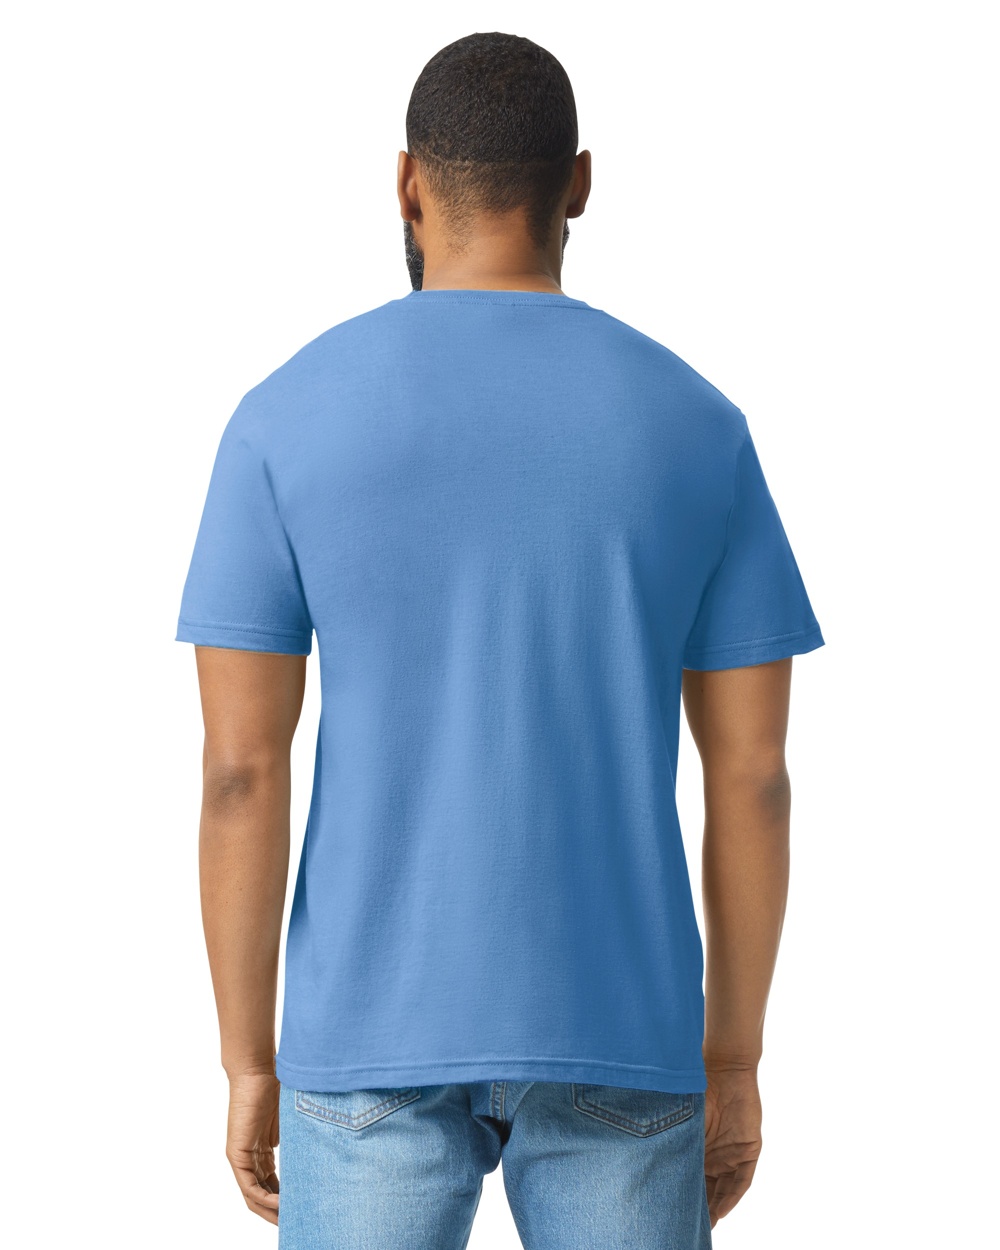 GD207CVC - Softstyle® CVC Adult T-Shirt - One Stop